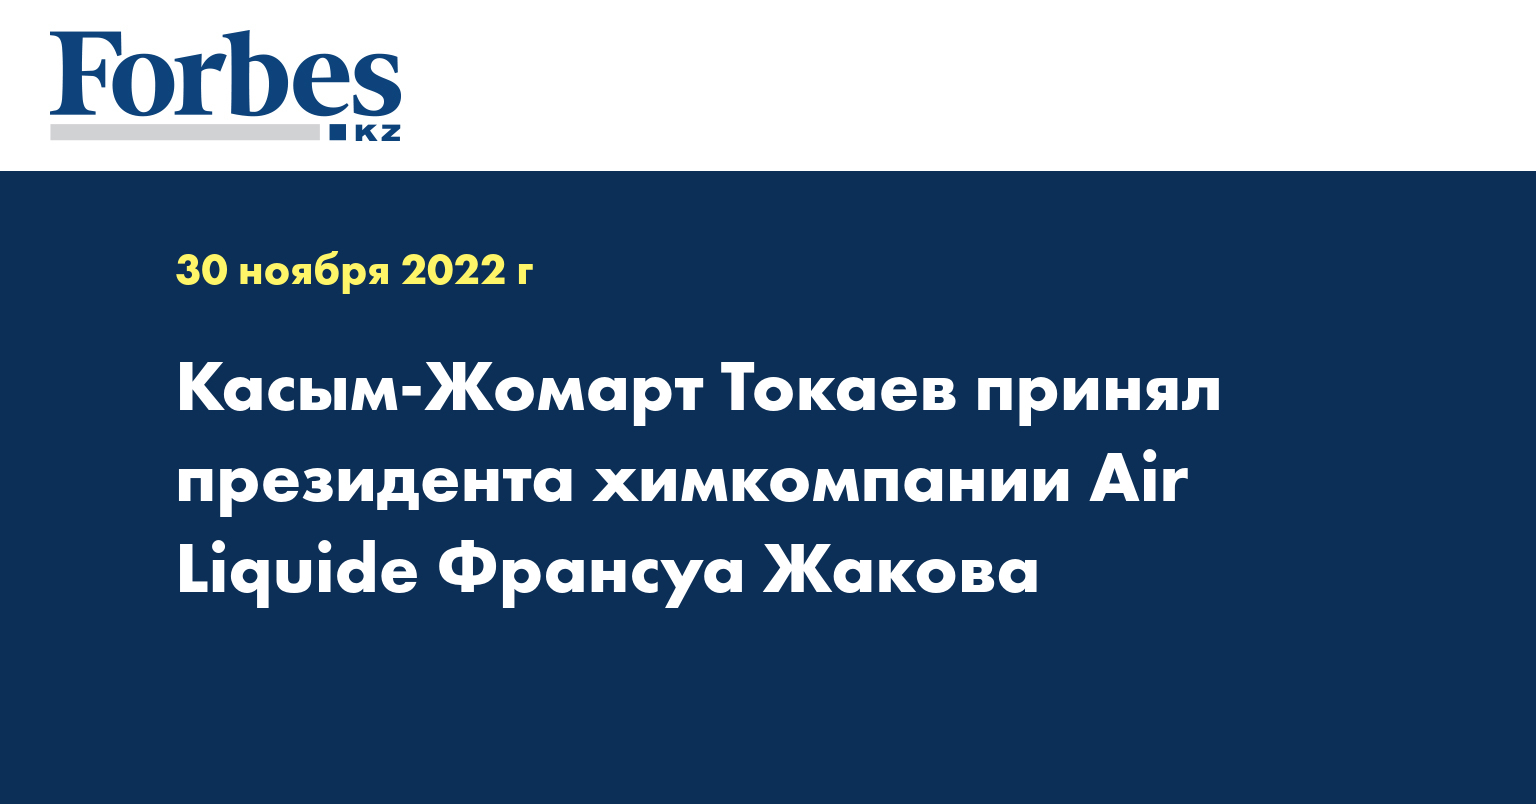 Касым-Жомарт Токаев принял президента химкомпании Air Liquide Франсуа Жакова